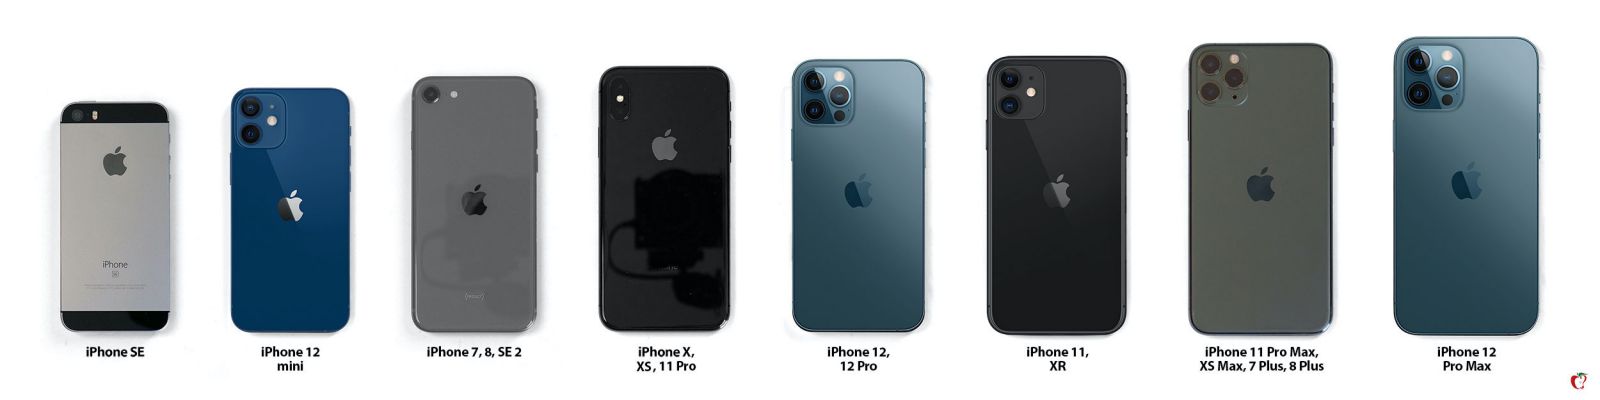 iphone-size-comparisons-wide-d.jpg